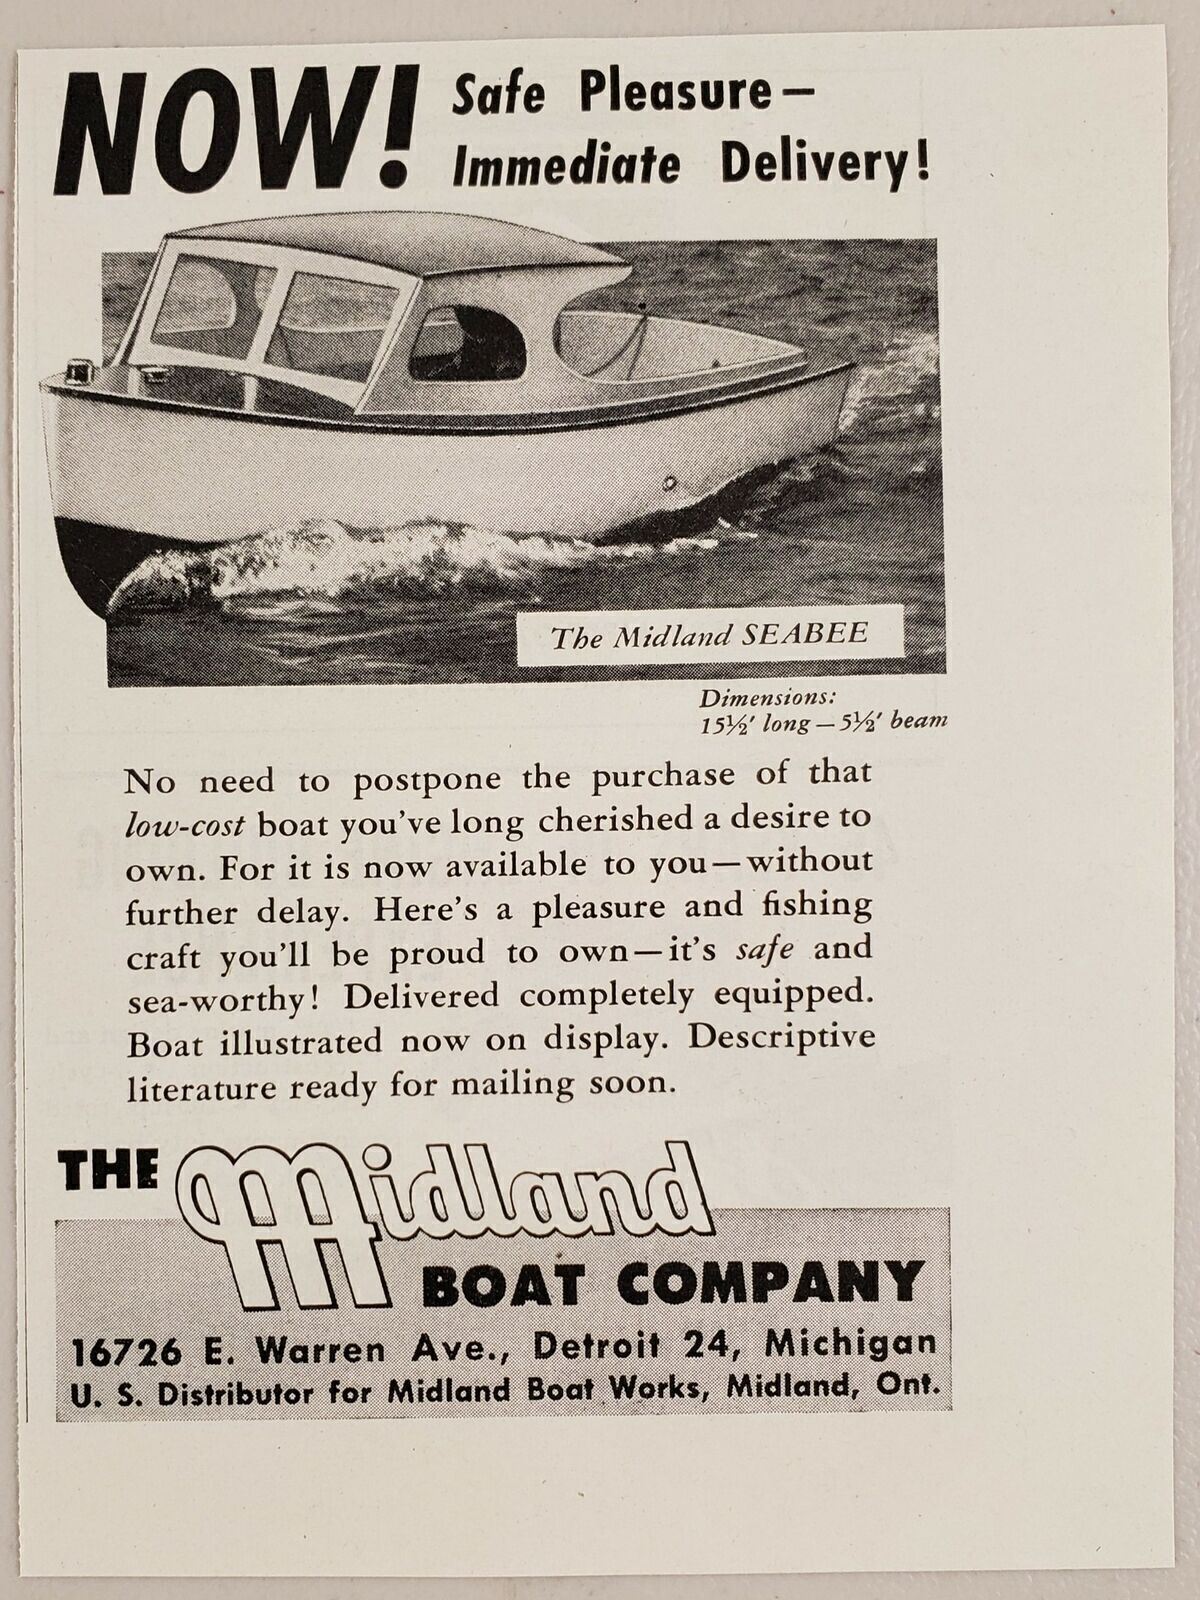 1946 Print Ad Midland SEABEE Boats Midland,ONT Canada & Detroit,Michigan